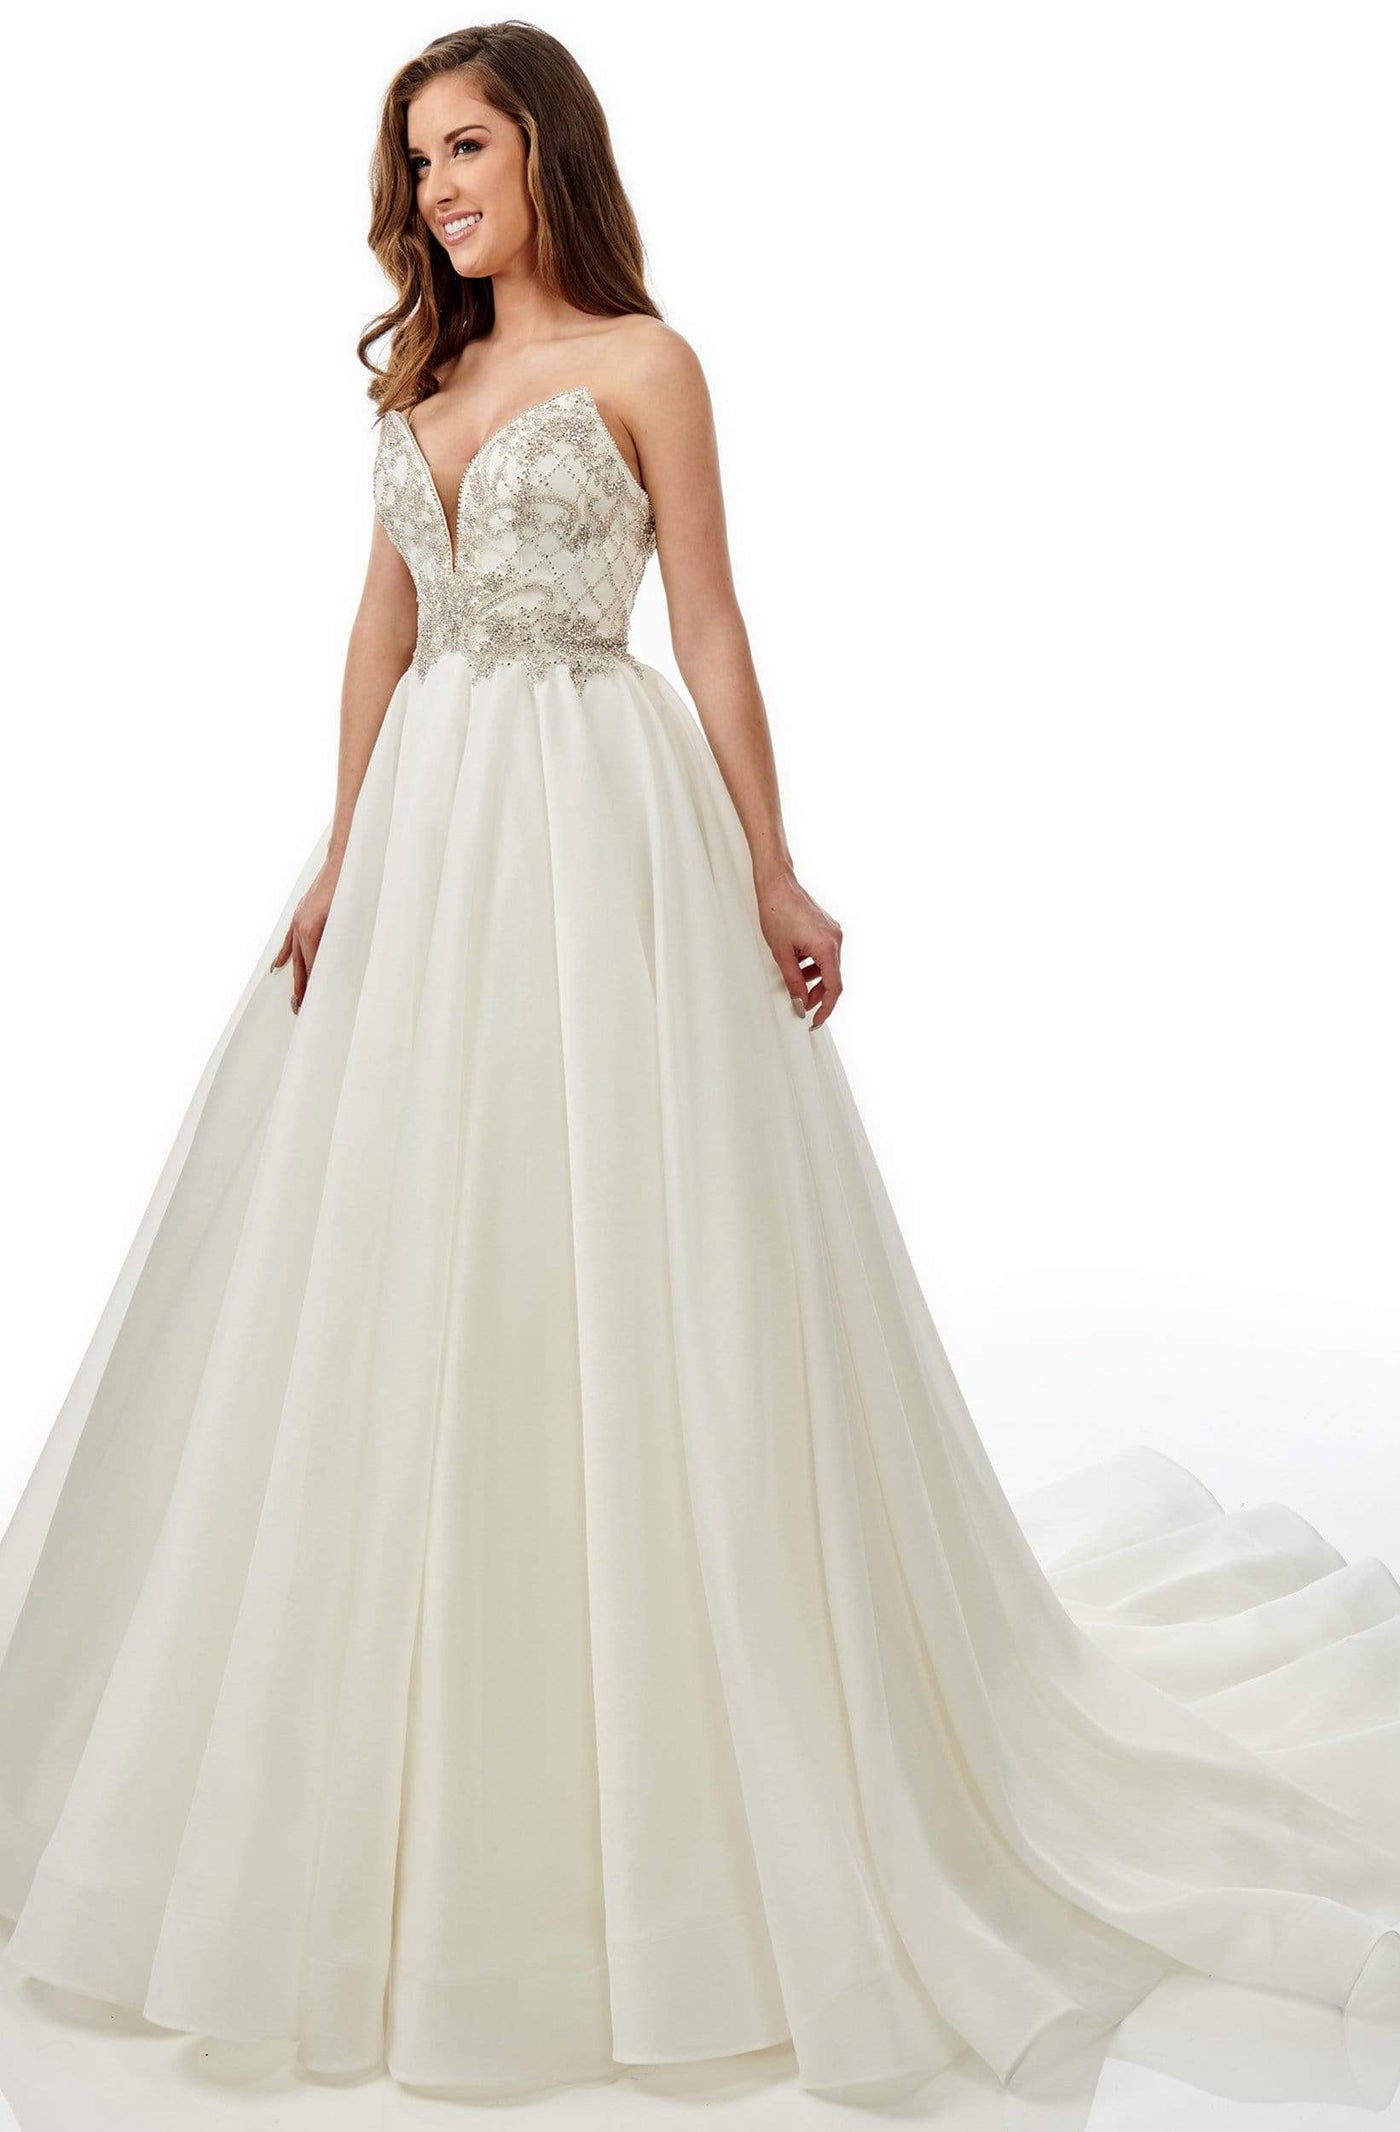 Lo'Adoro Bridal By Rachel Allan - M762 Embellished V-Neck Ballgown Wedding Dresses 0 / White Silver